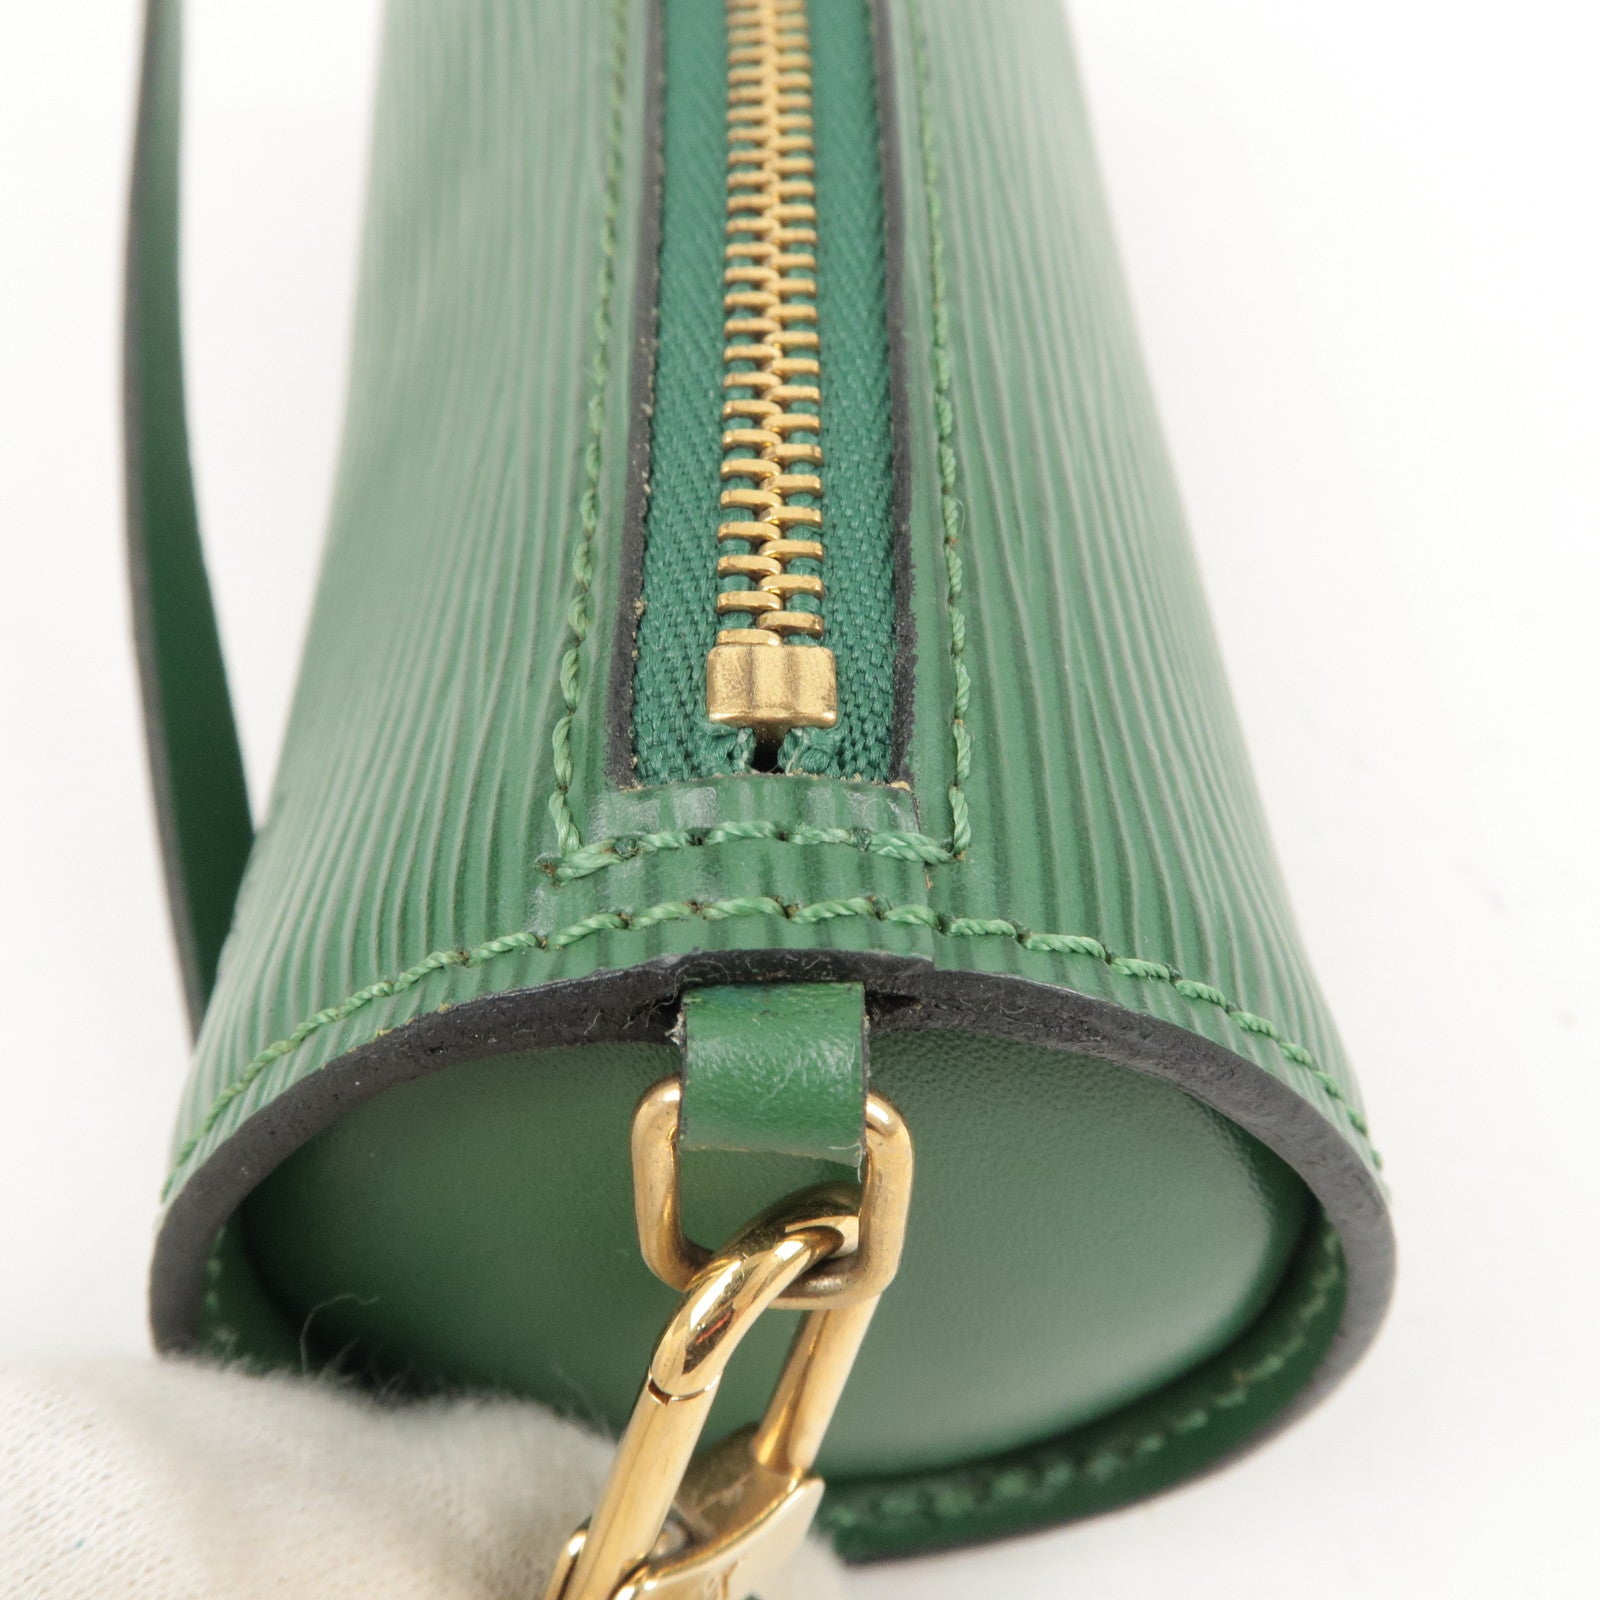 Louis Vuitton Green Epi Leather Soufflot Bag.  Luxury